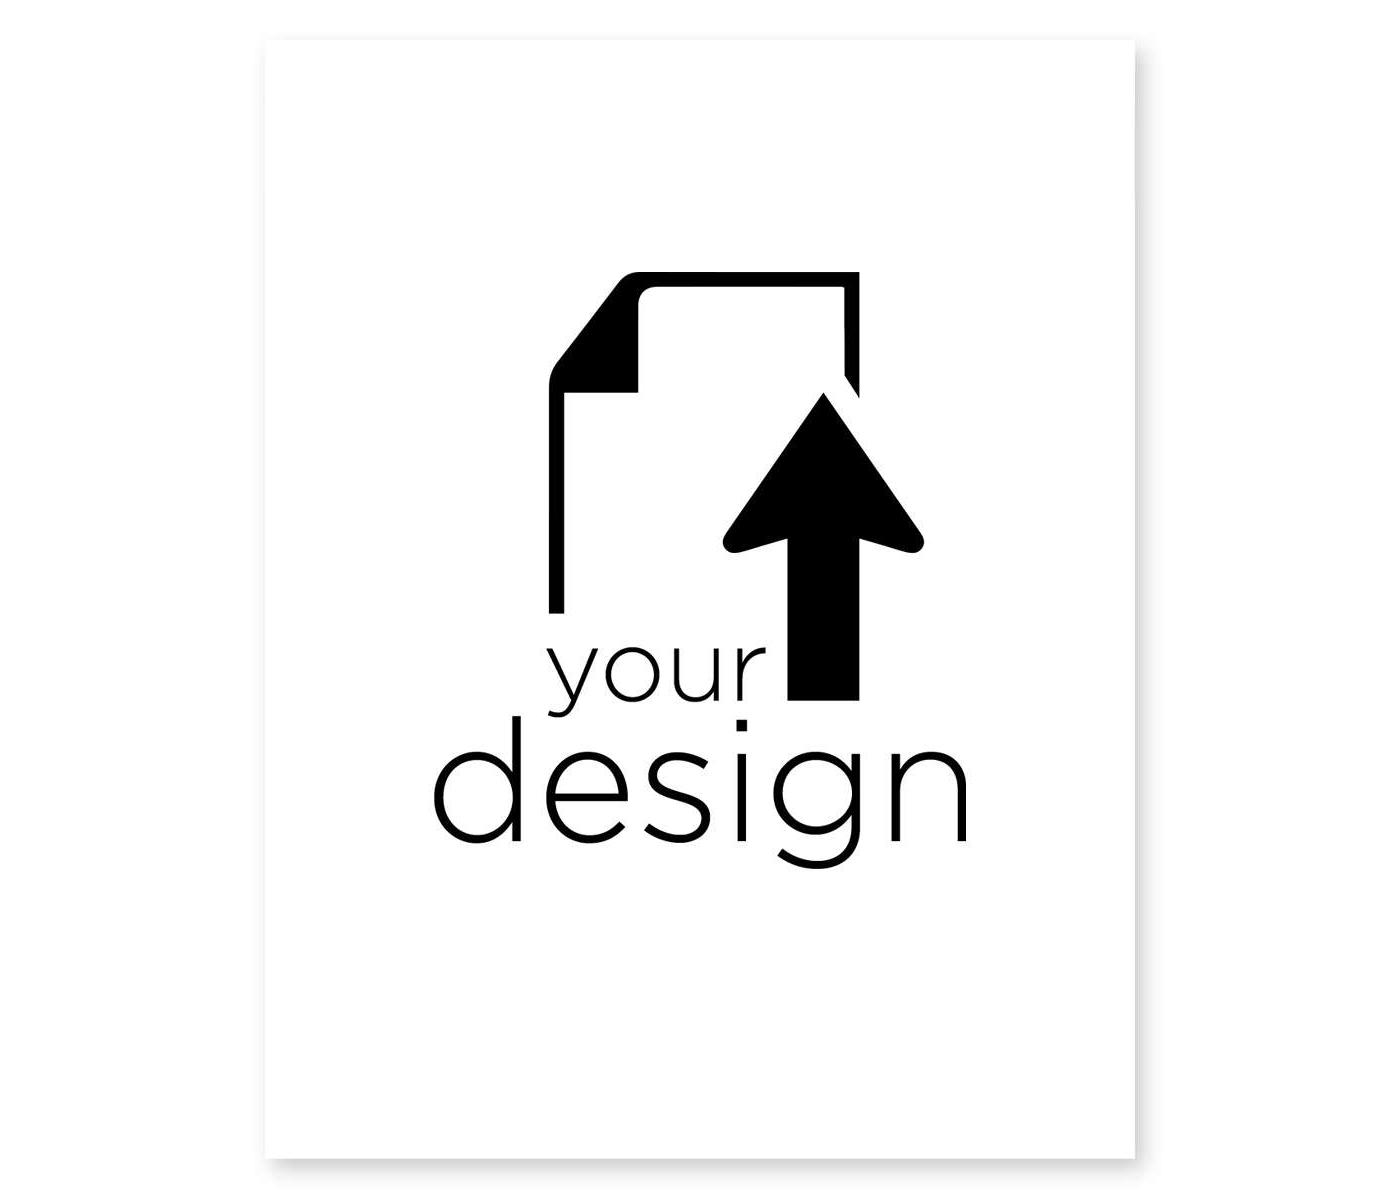 Your Design Letterhead 8-1/2x11 - White